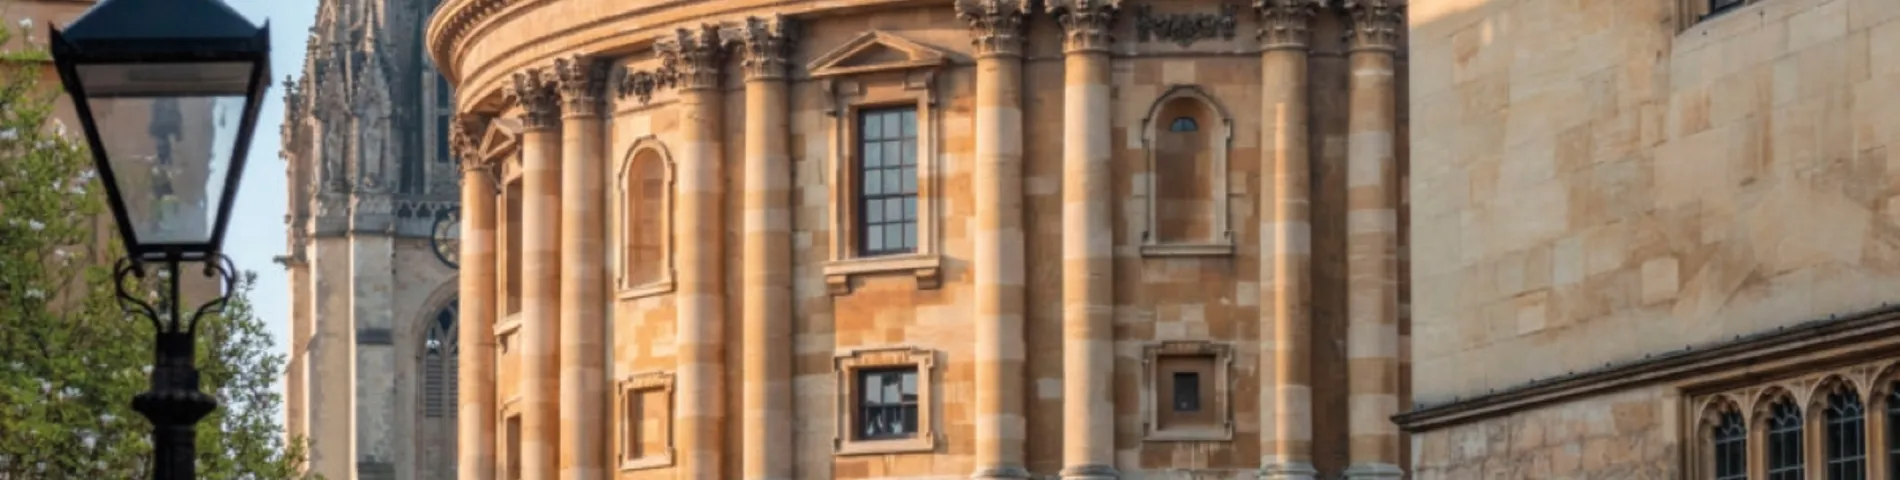 Oxford Royale Academy Bild 1